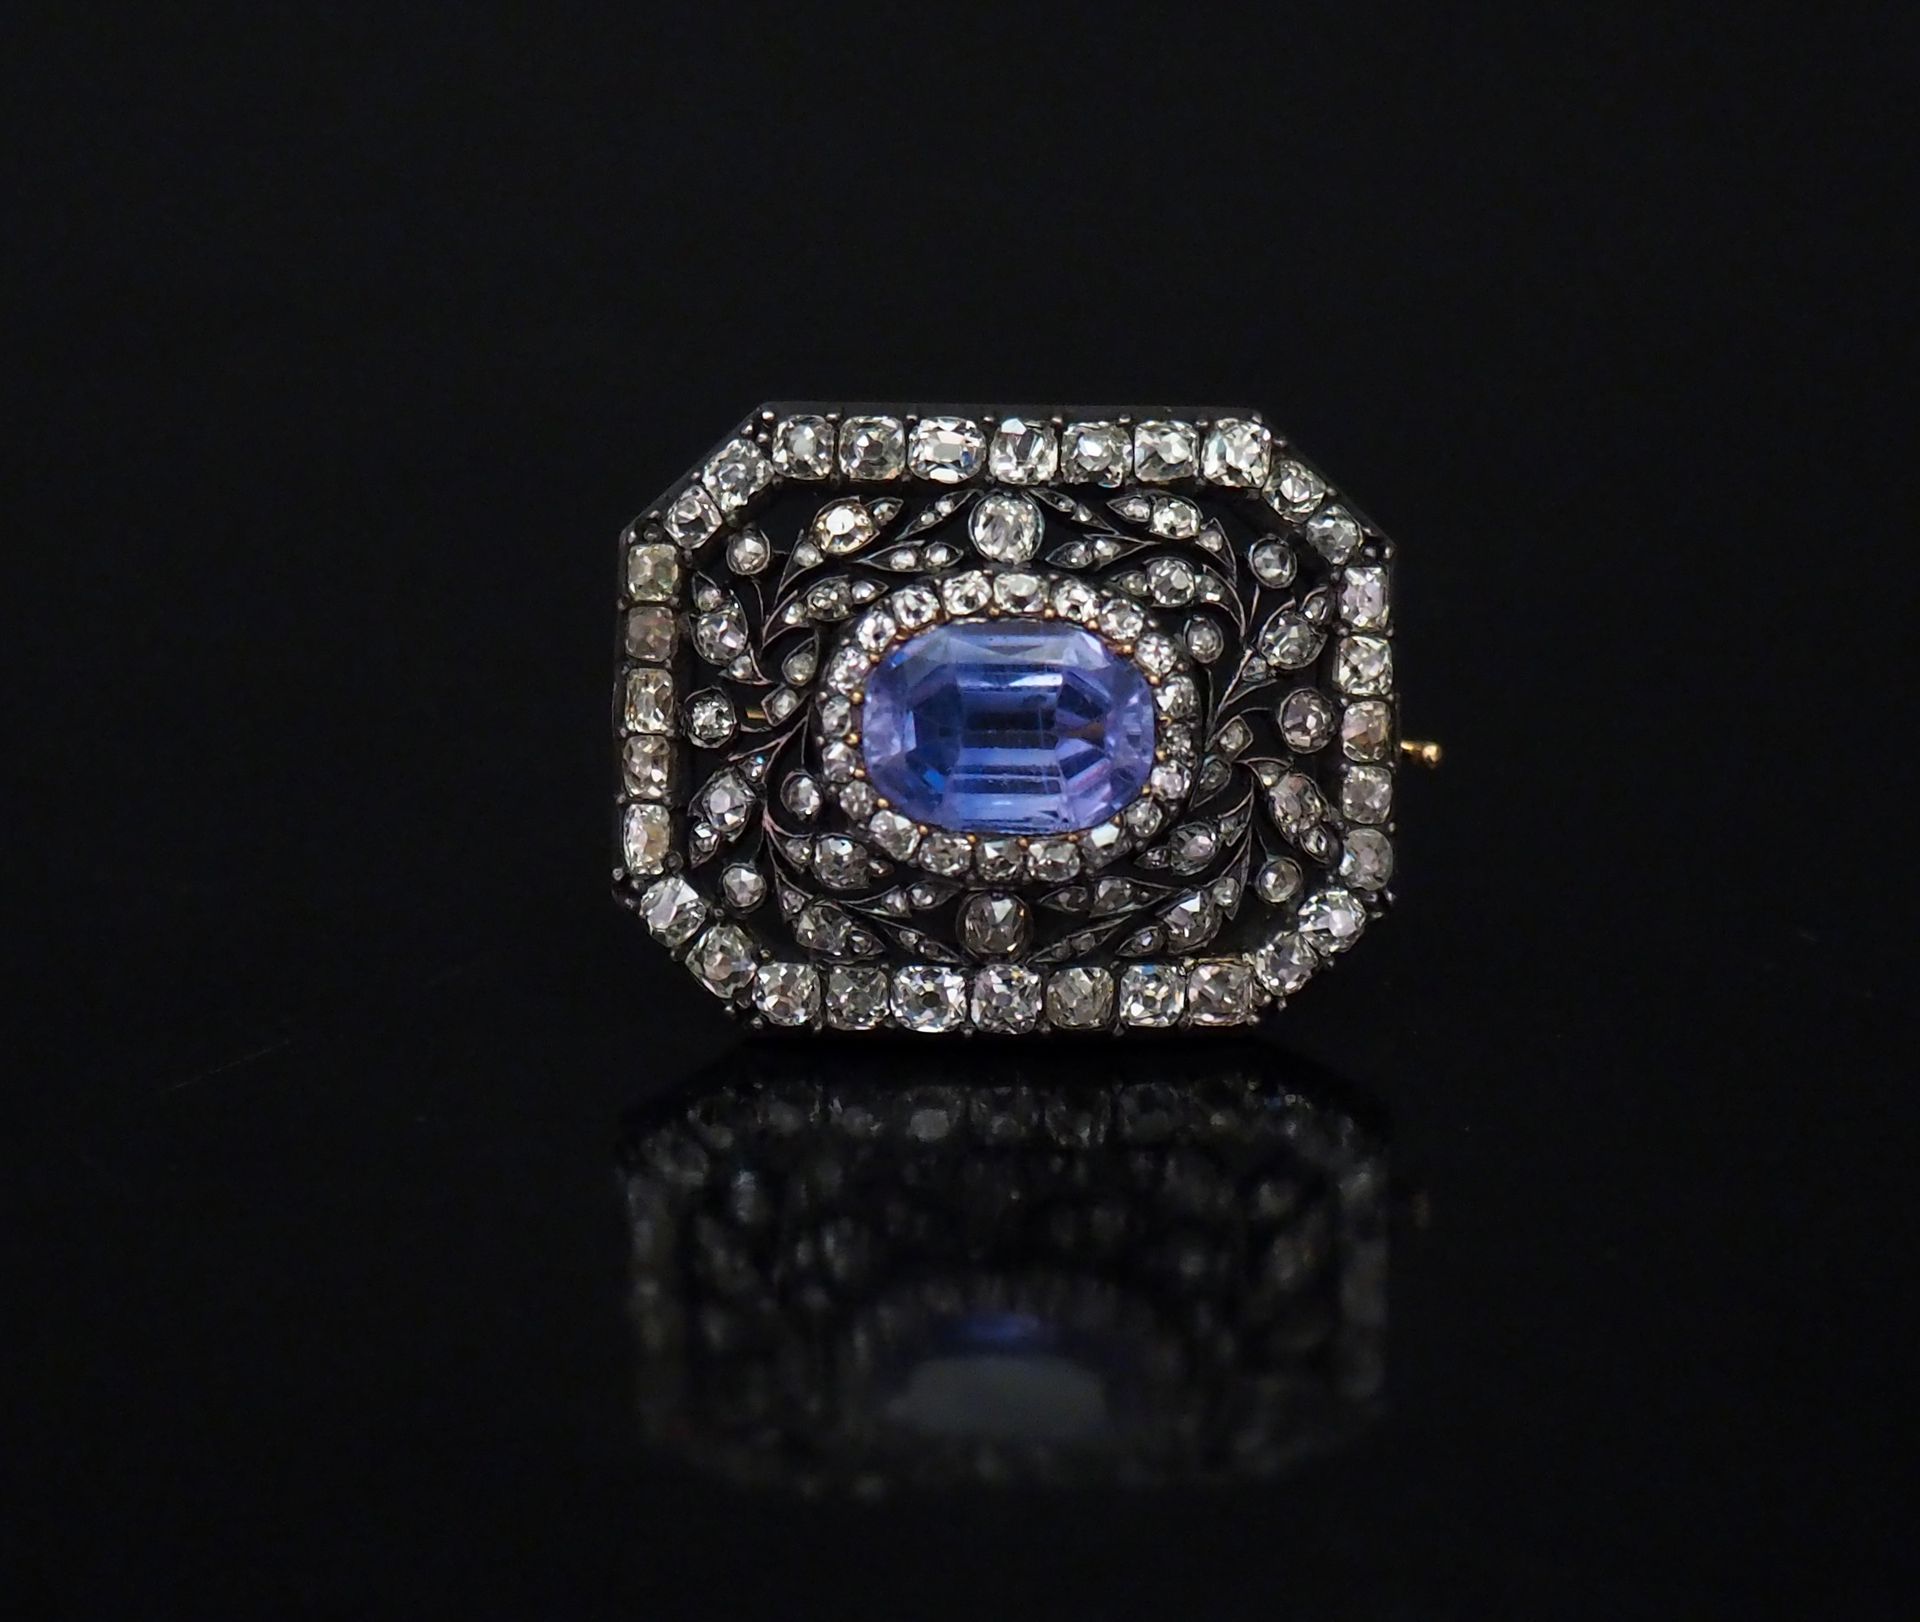 Null 镂空树枝设计的黄金和银质八角形胸针，镶嵌着一颗蓝色宝石和玫瑰切割钻石。

有纪念意义的E.T

2.5 x 3.2 厘米

重量8.90克